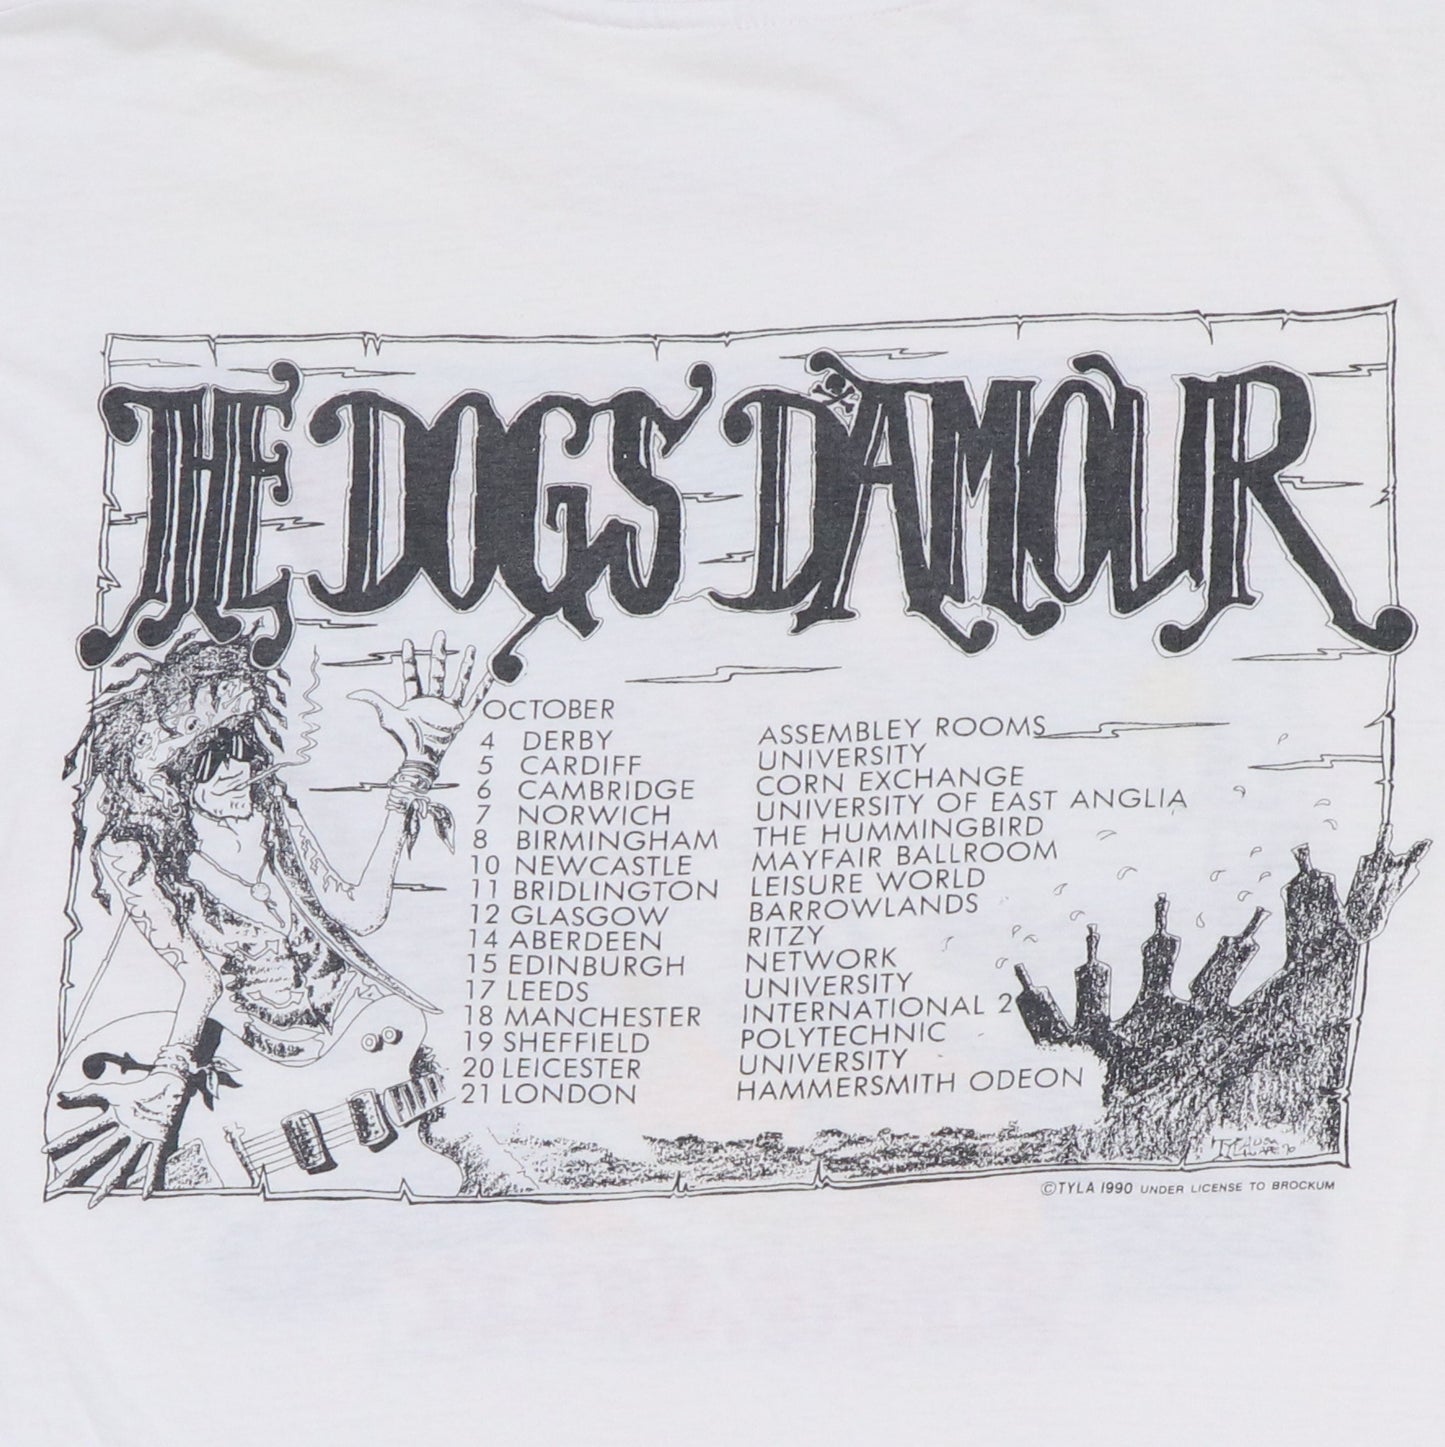 1990 Dogs D'Amour Victims Of Success Tour Shirt